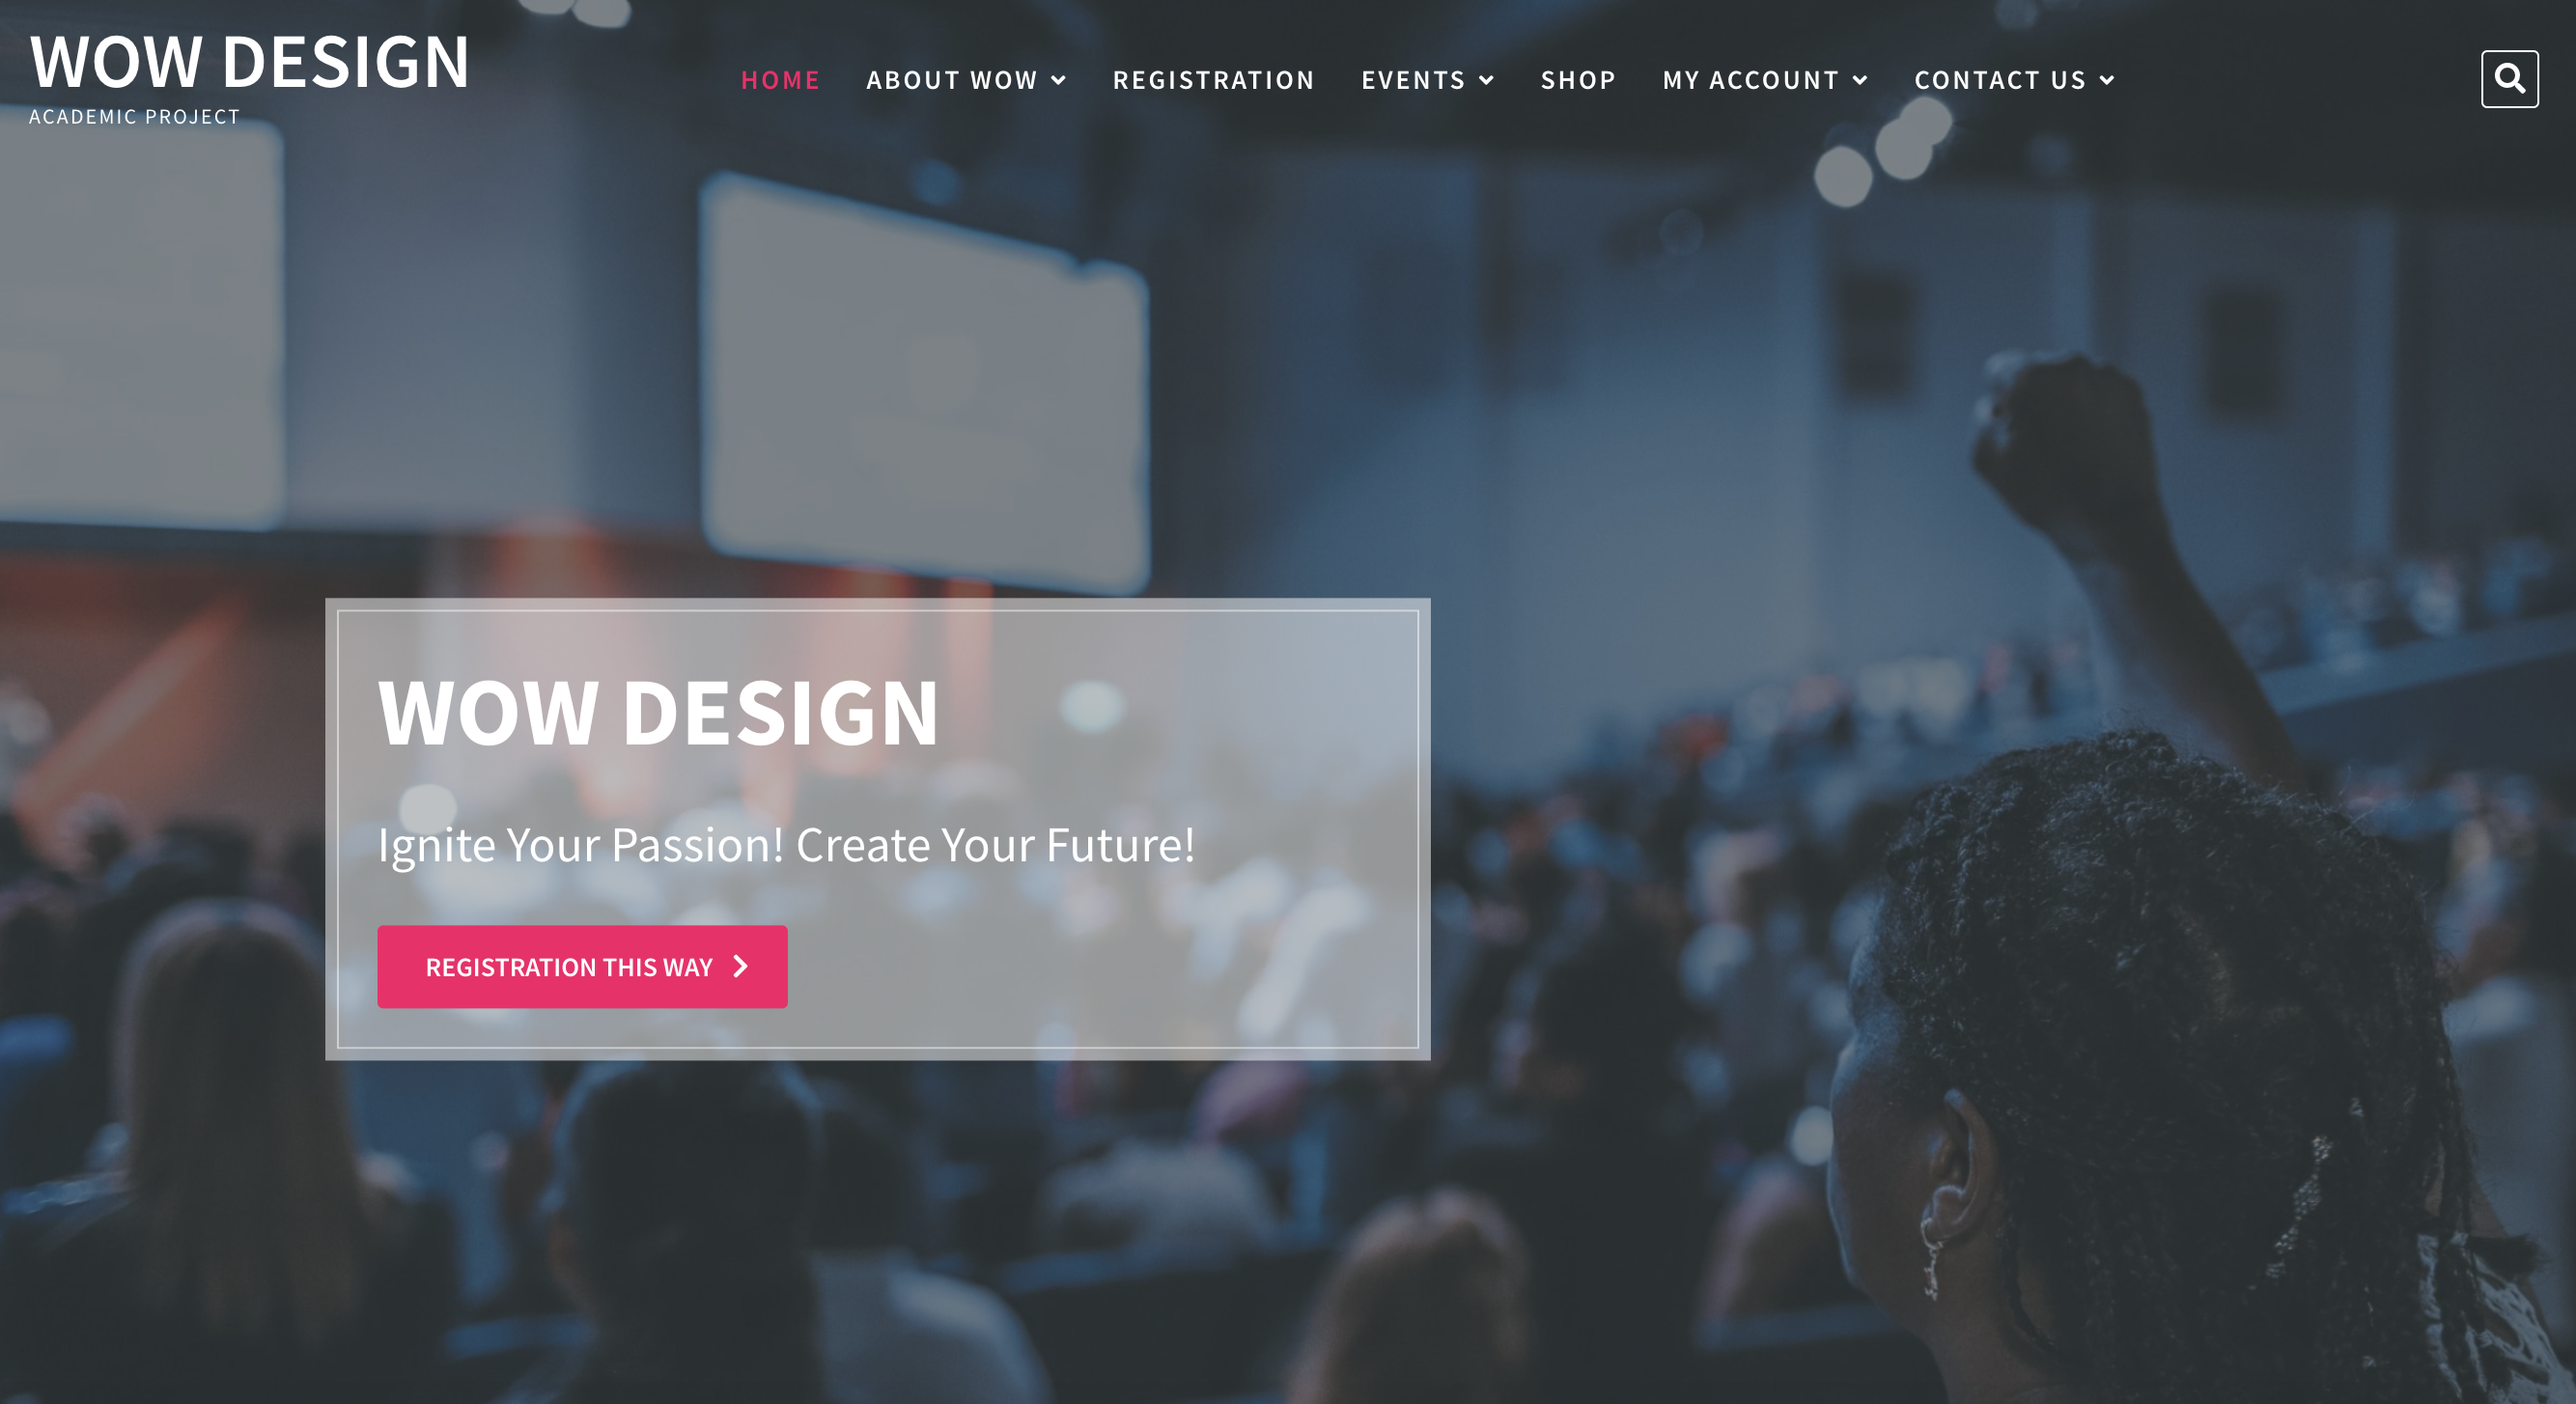  wow design website